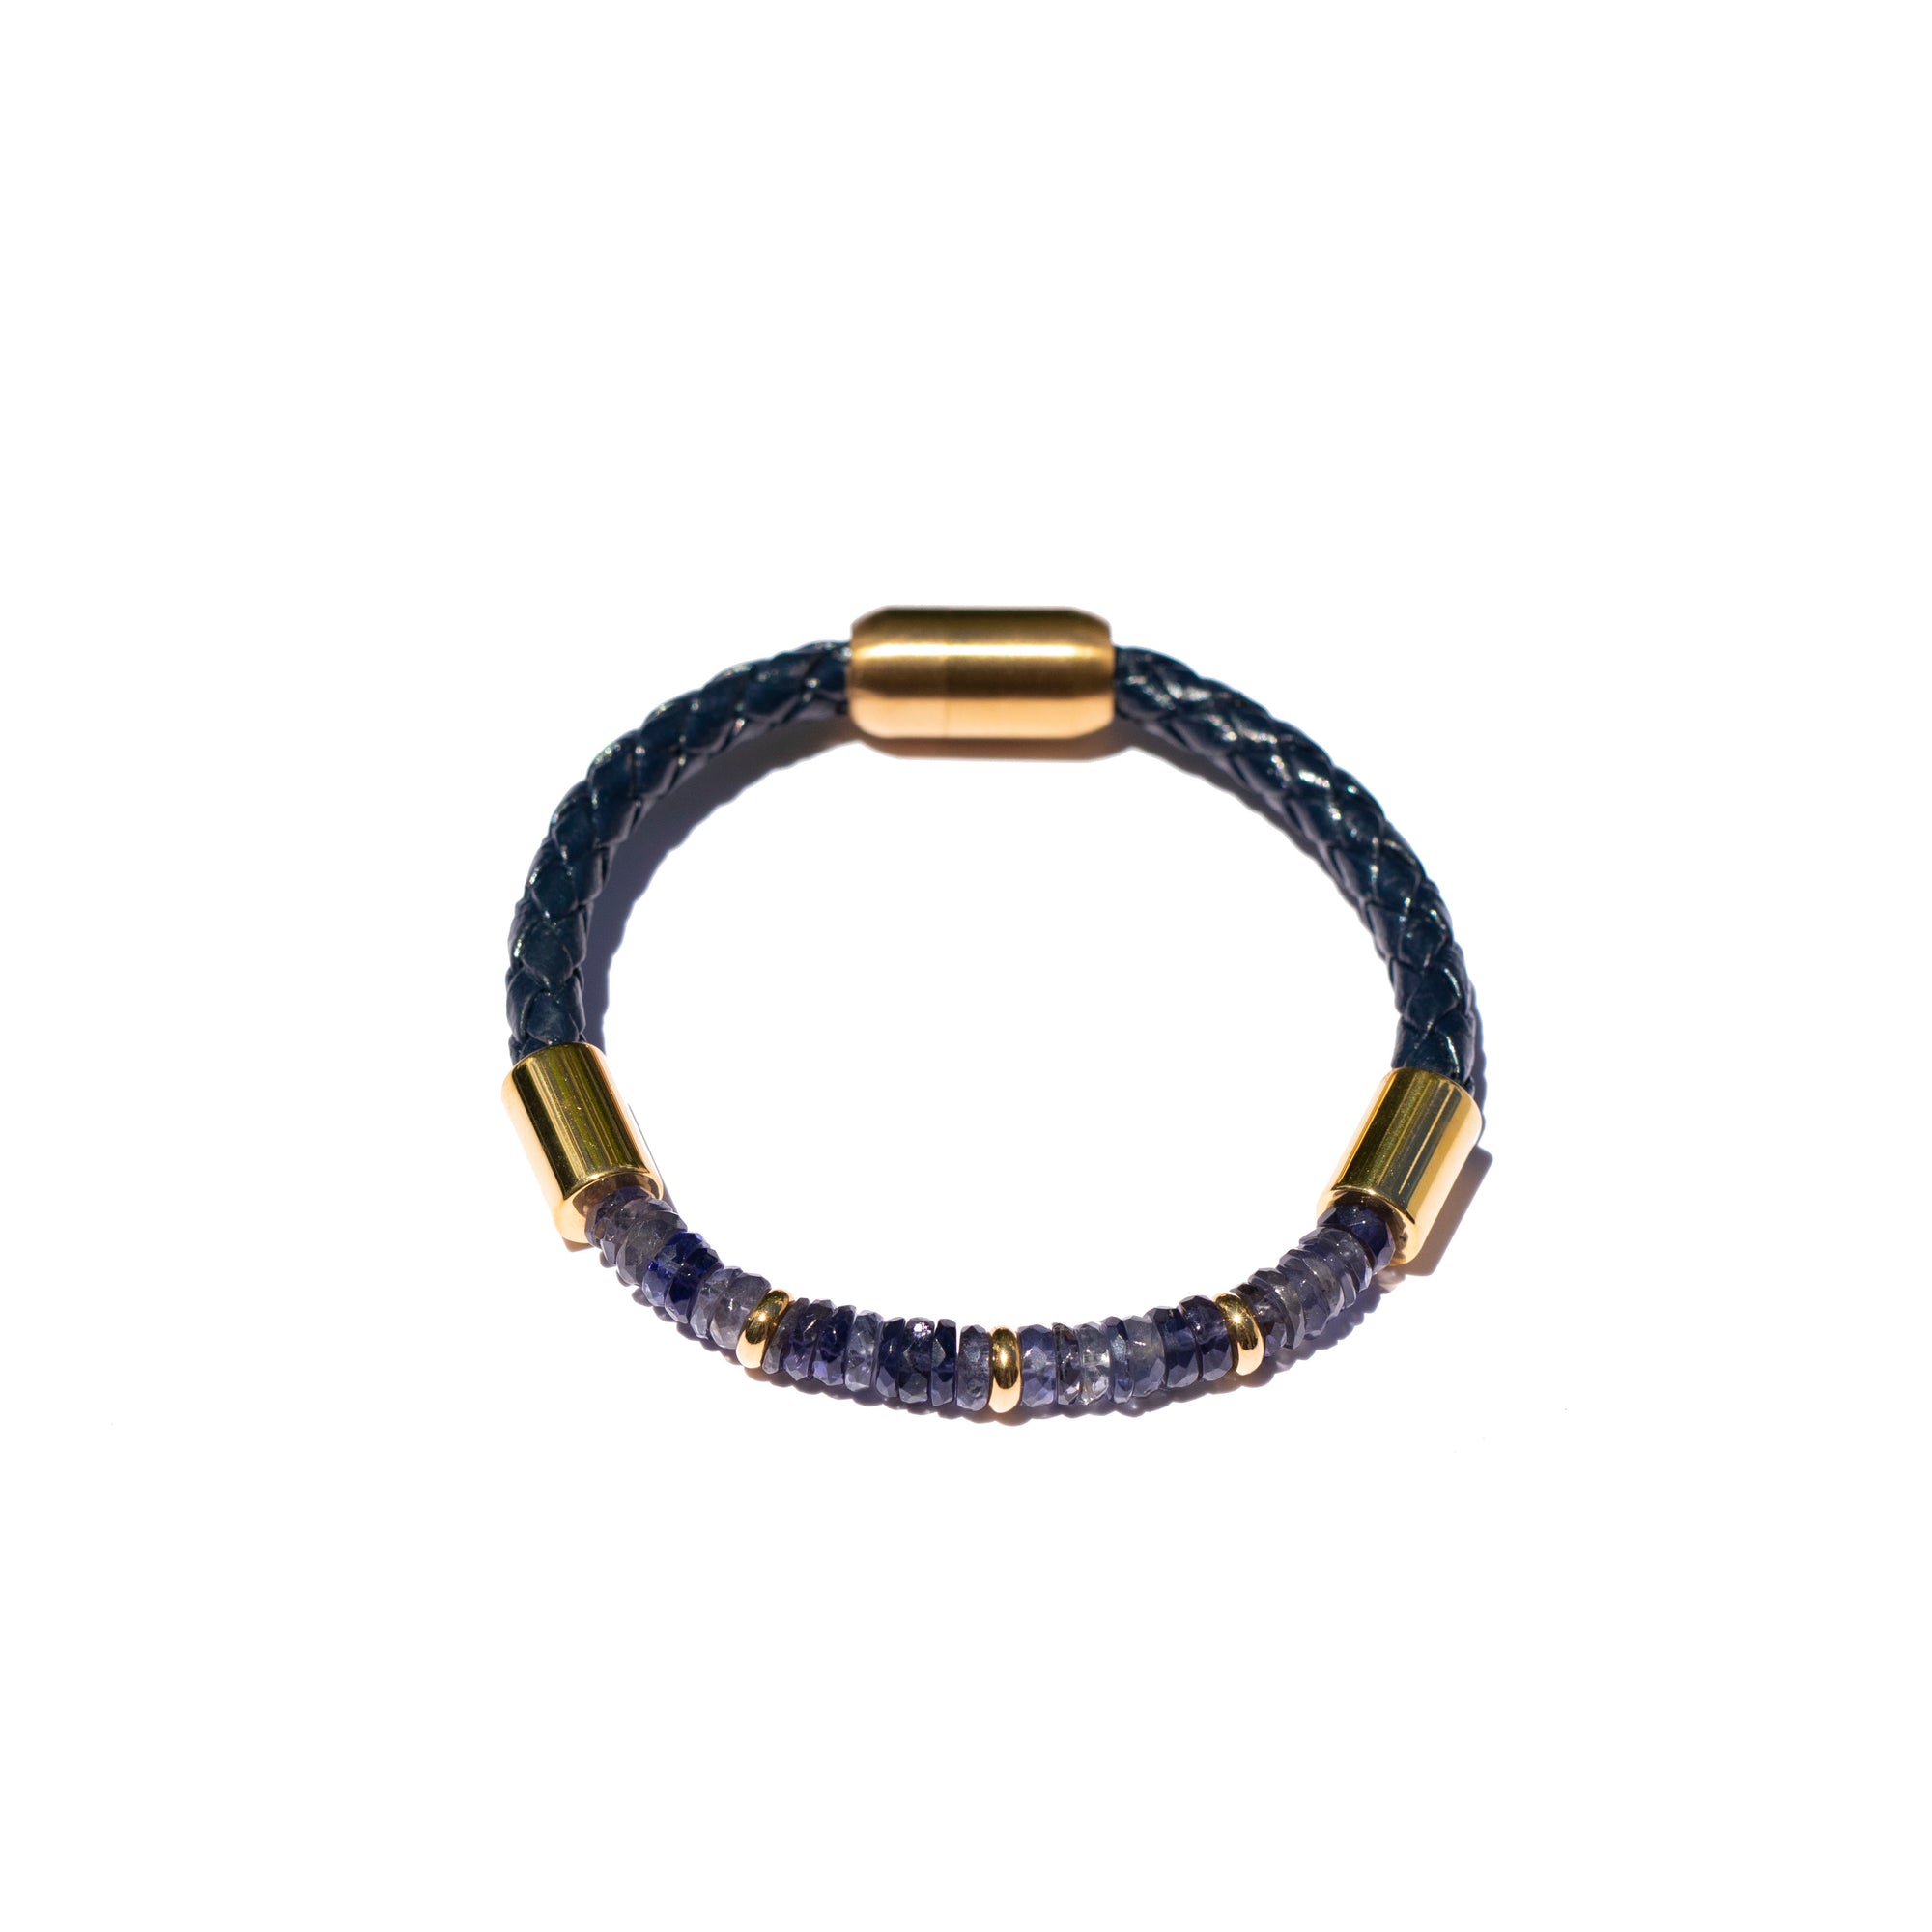 Storyteller Collection: Iolite "Water Sapphire", 24K Gold Vermeil & Leather Bracelet